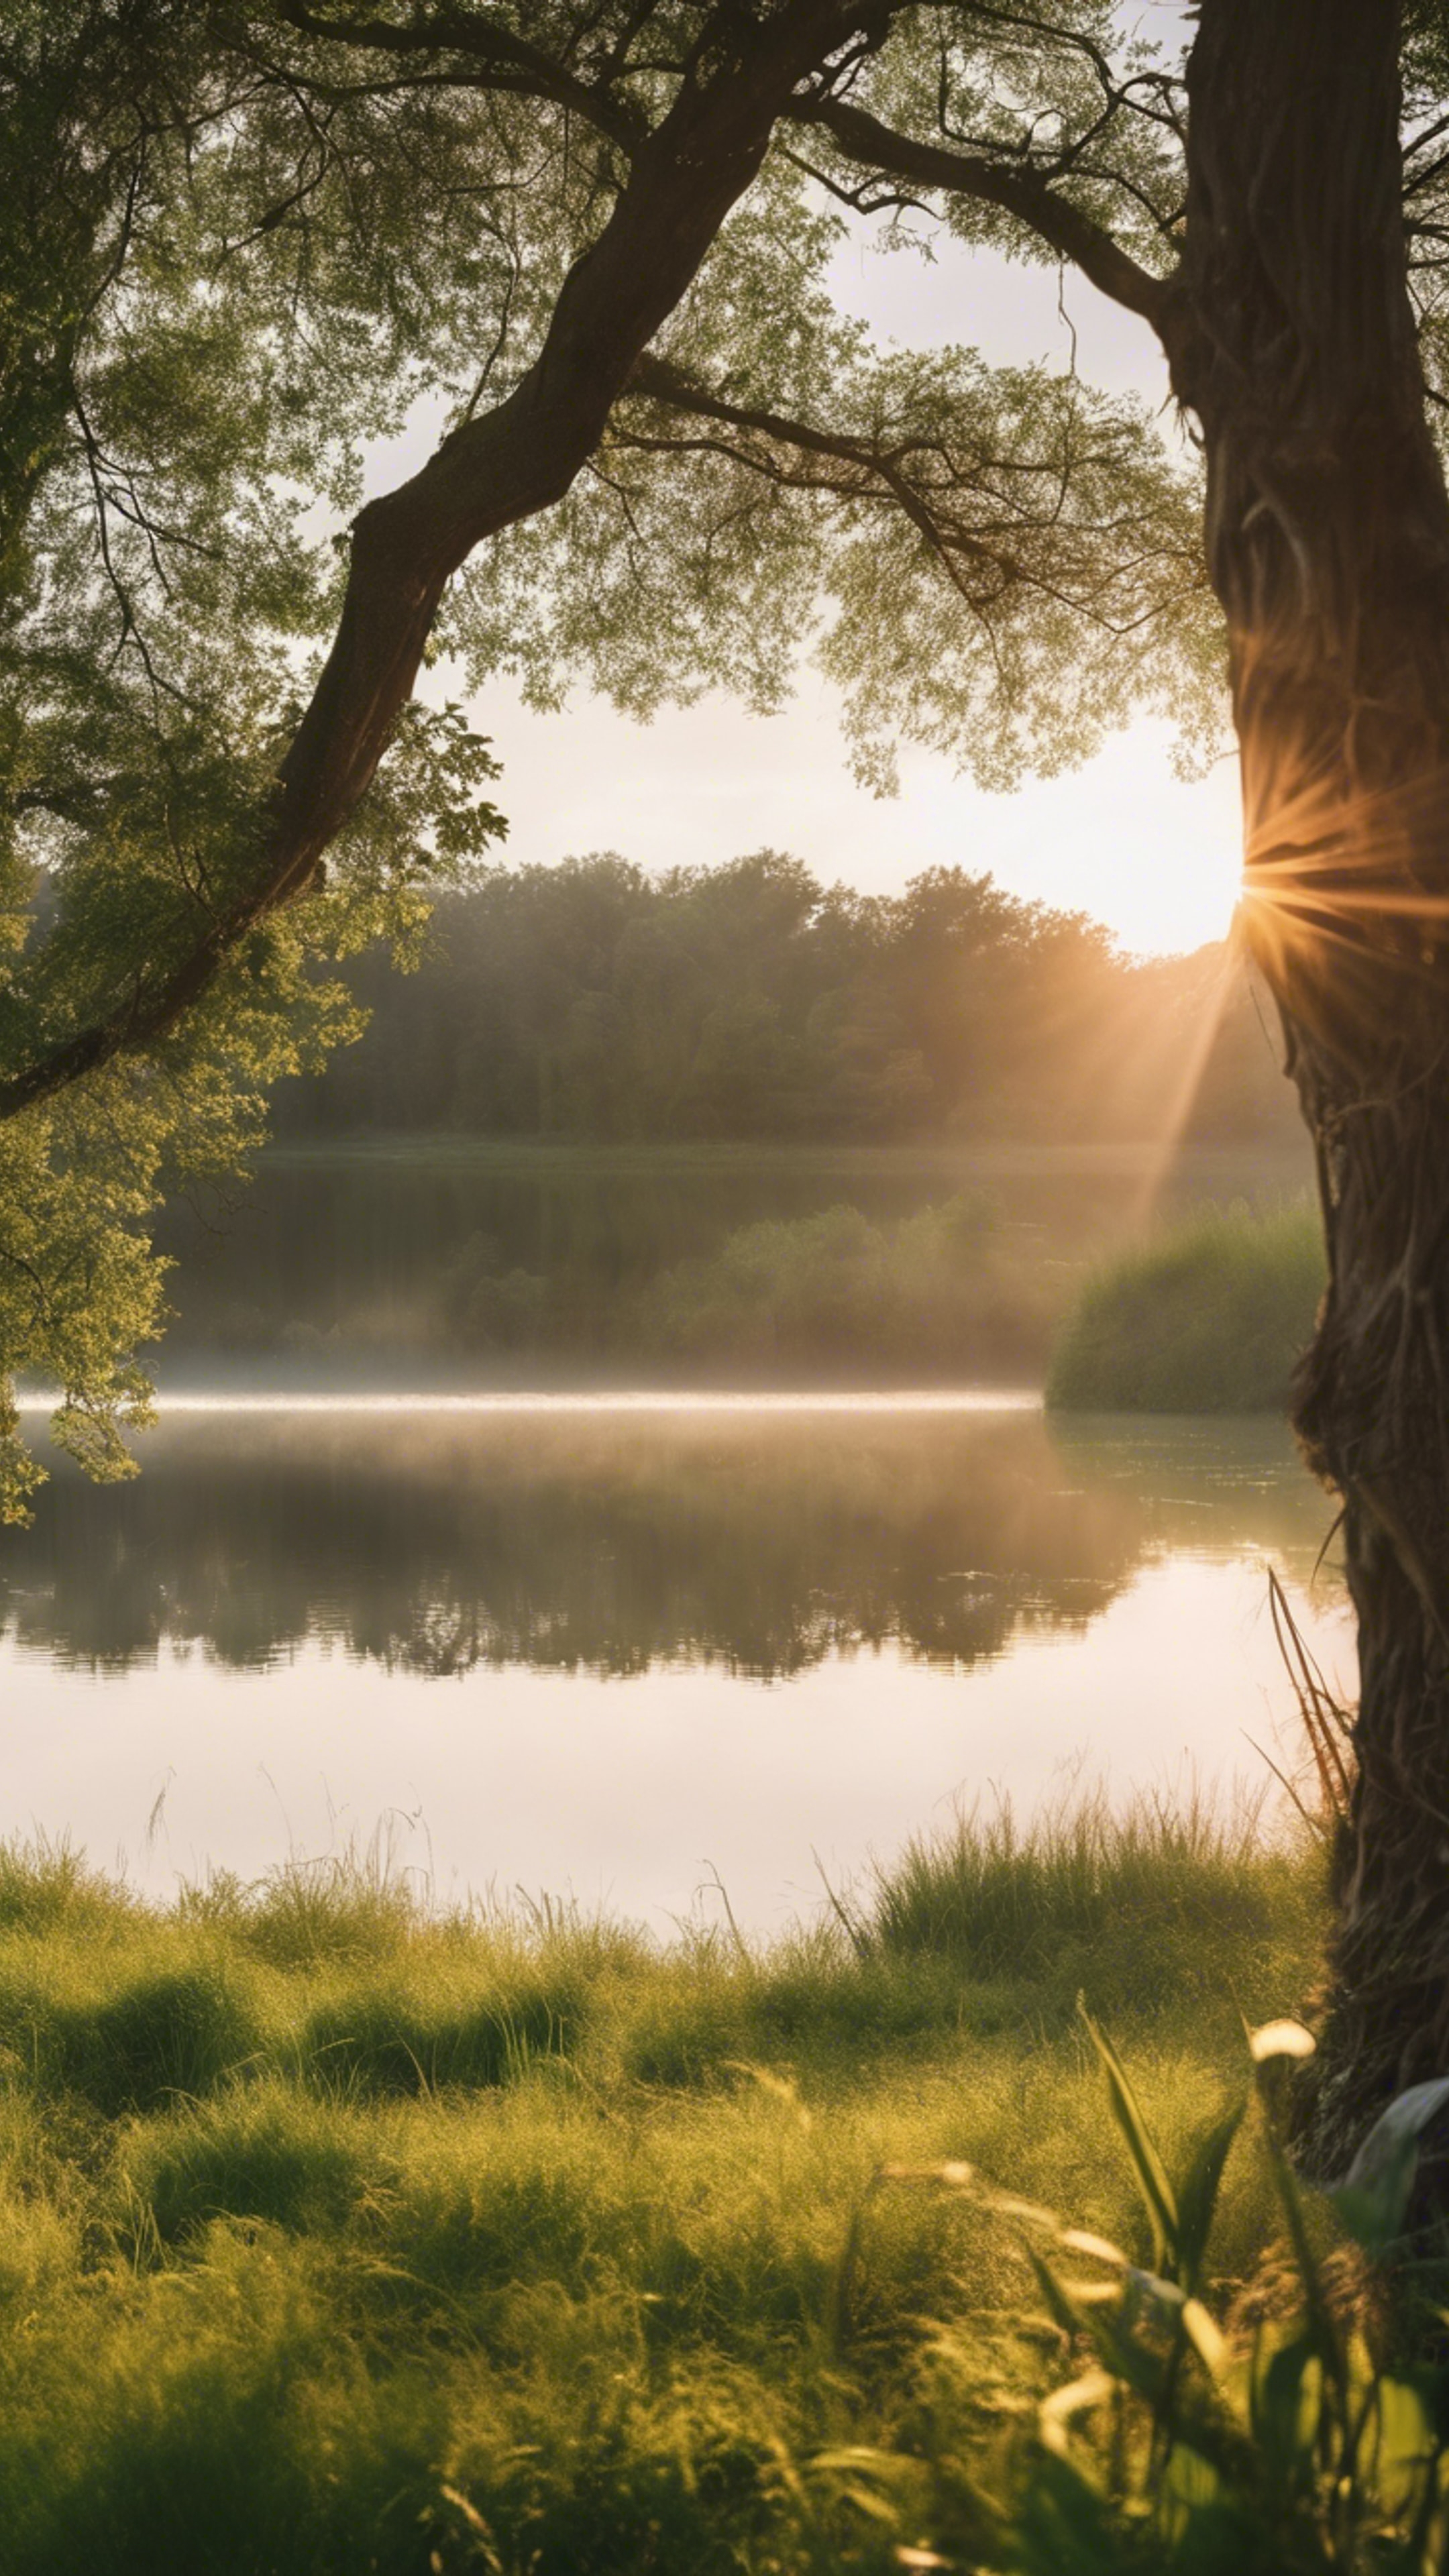 A beautiful sunrise reflecting off a serene lake, enveloped by lush green meadows. Wallpaper[3fcd1b5f237347a583b1]